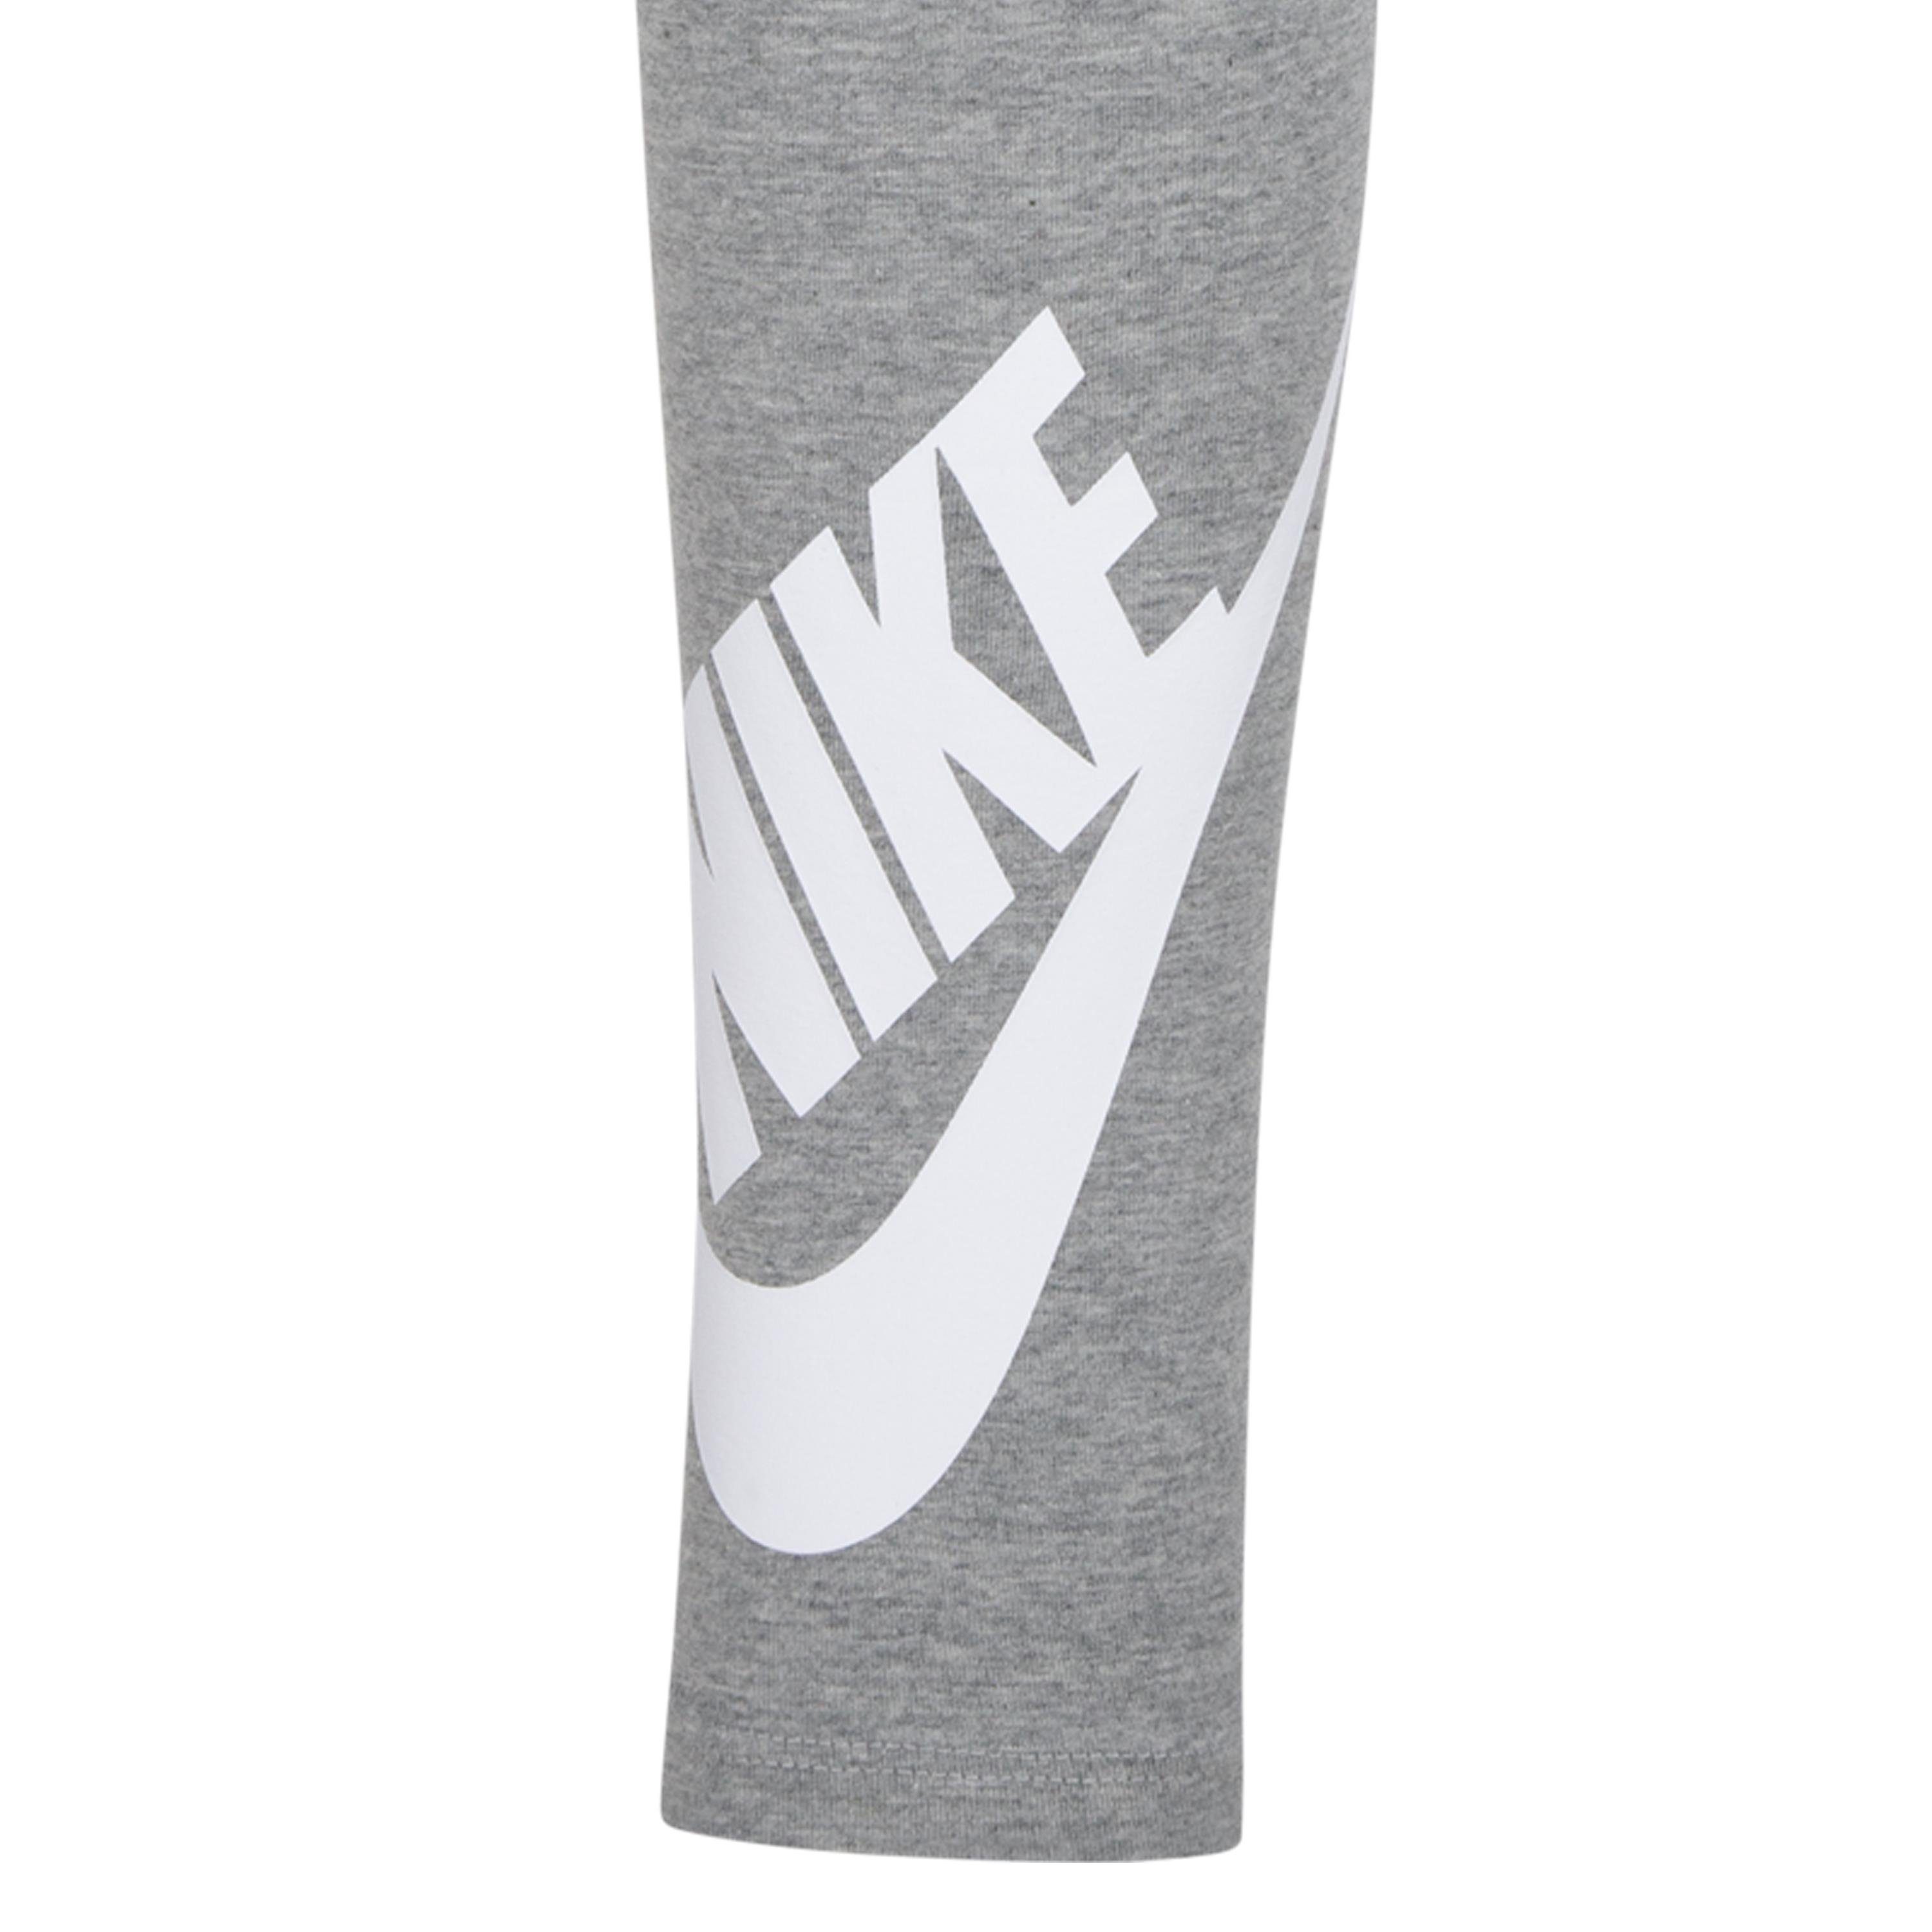 Nike SEE LEG A grau-meliert - LEGGING Kinder für Sportswear NSW NKG Leggings G